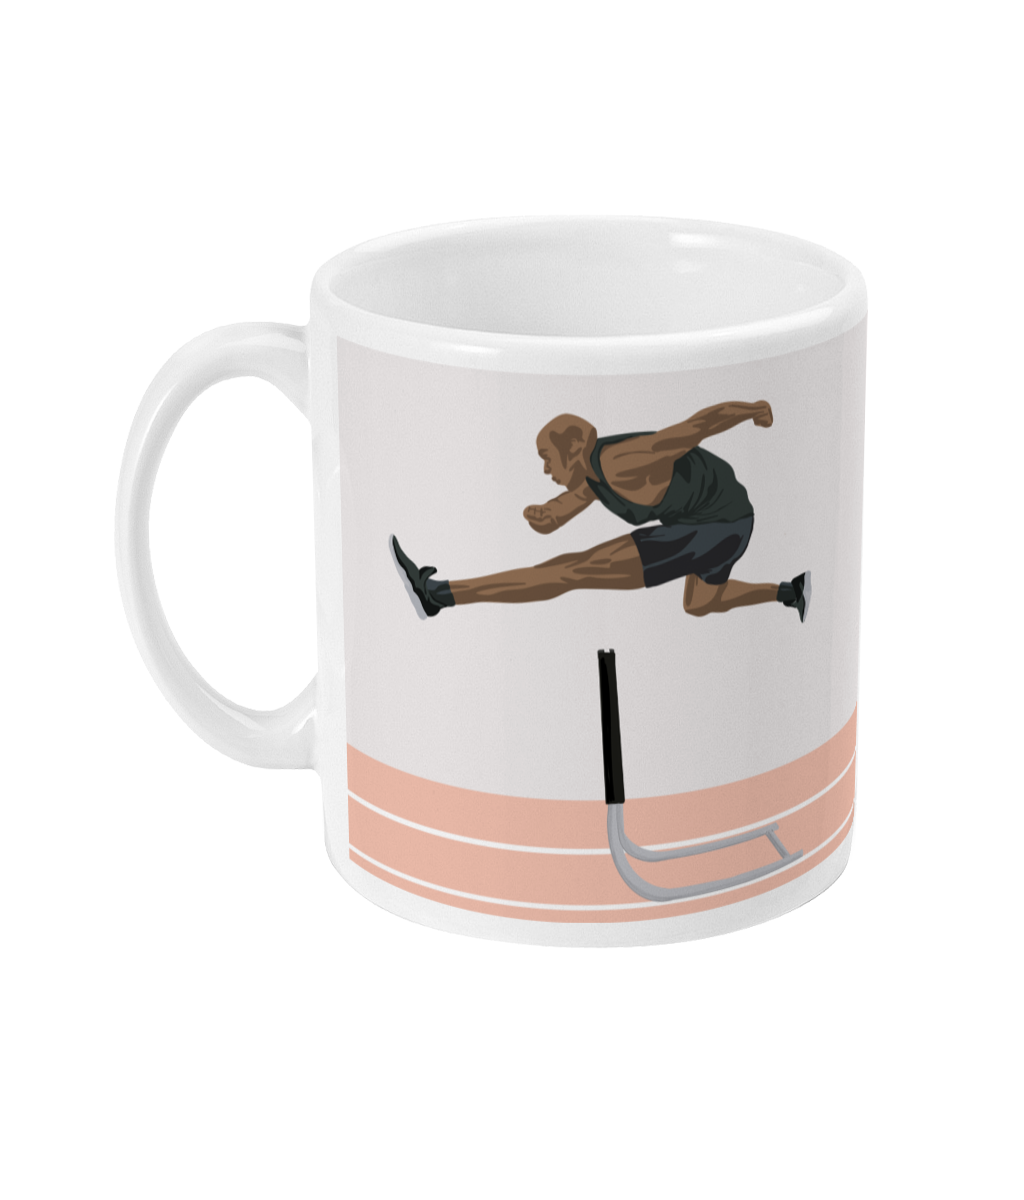 Athletics cup or mug "Men's hurdle jump" - Customizable